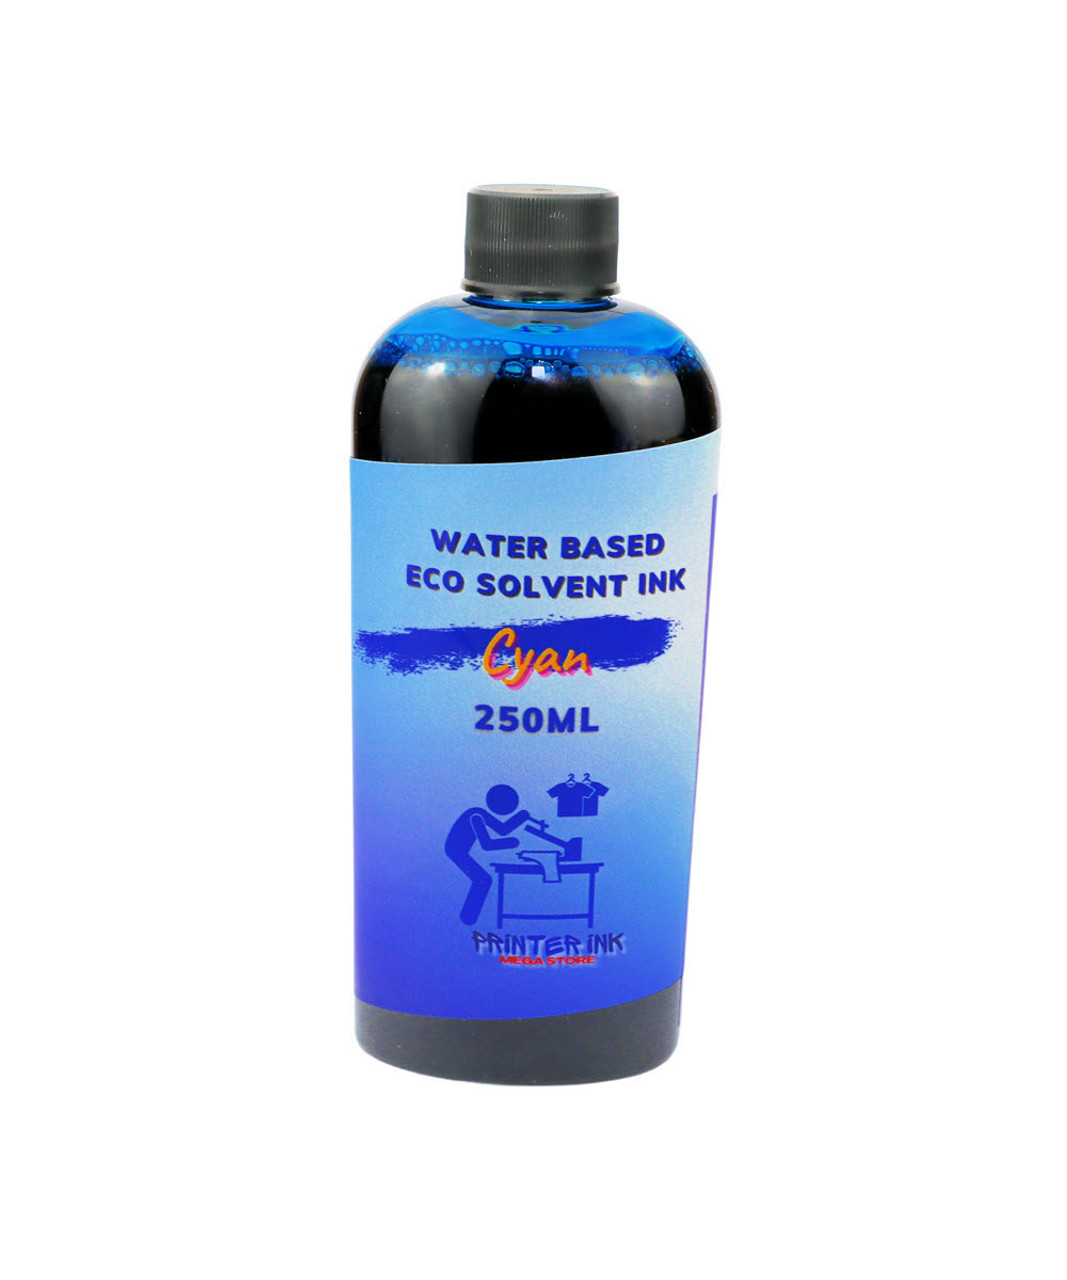 Cyan Water Based Eco Solvent Ink 250ml bottle for Epson EcoTank ET-4810 SuperTank Printer